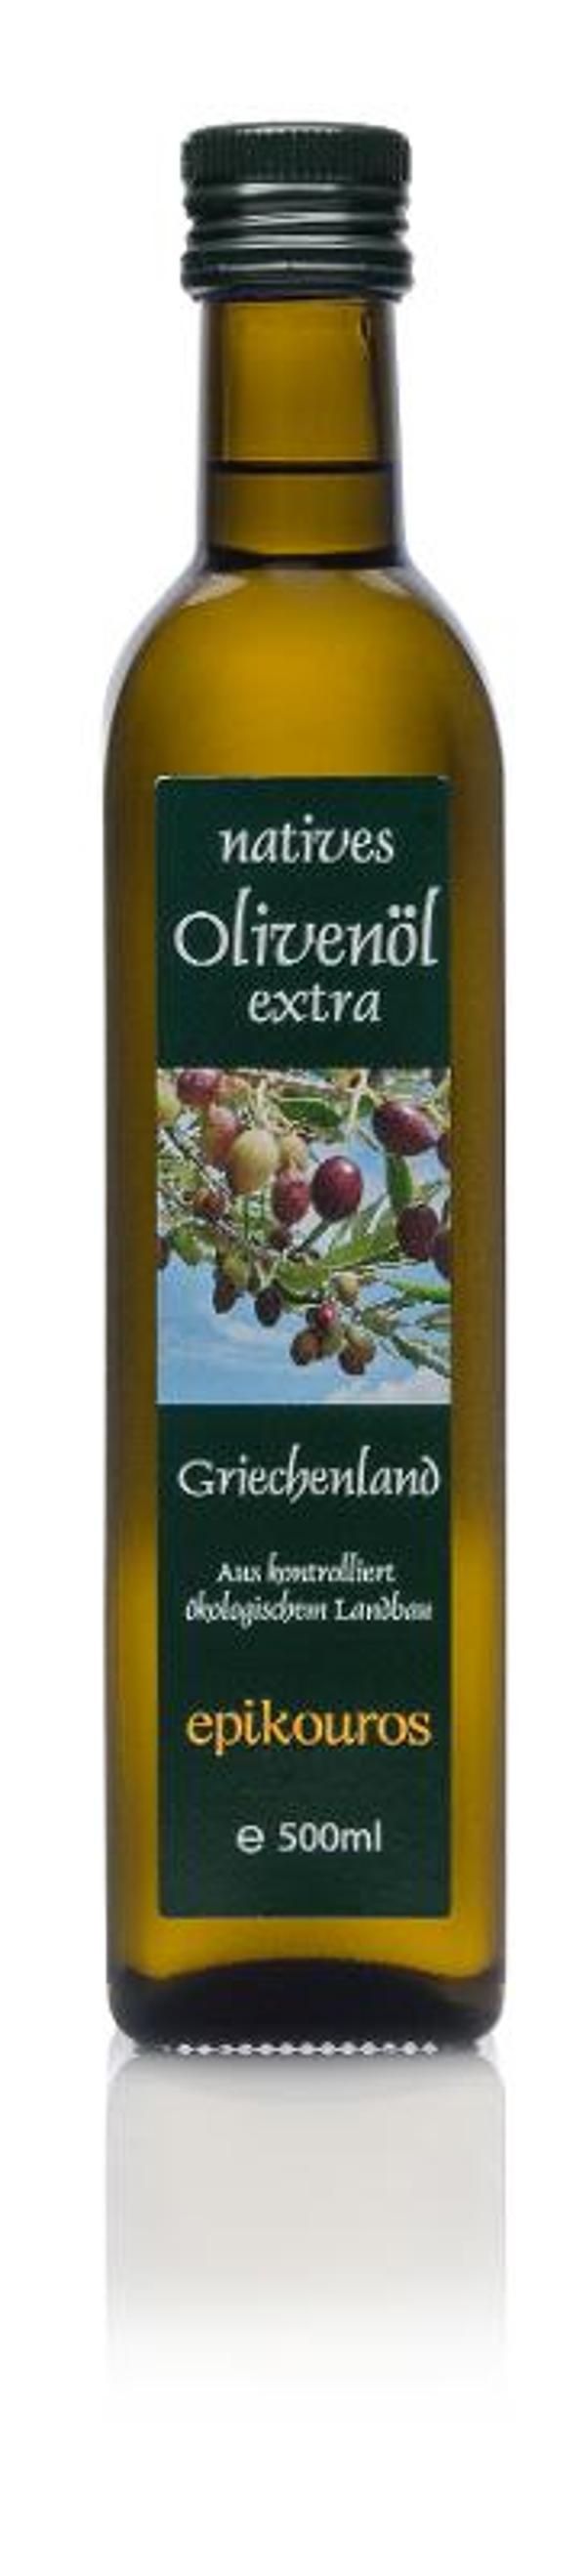 Produktfoto zu Olivenöl  Epikouros 0,5 l